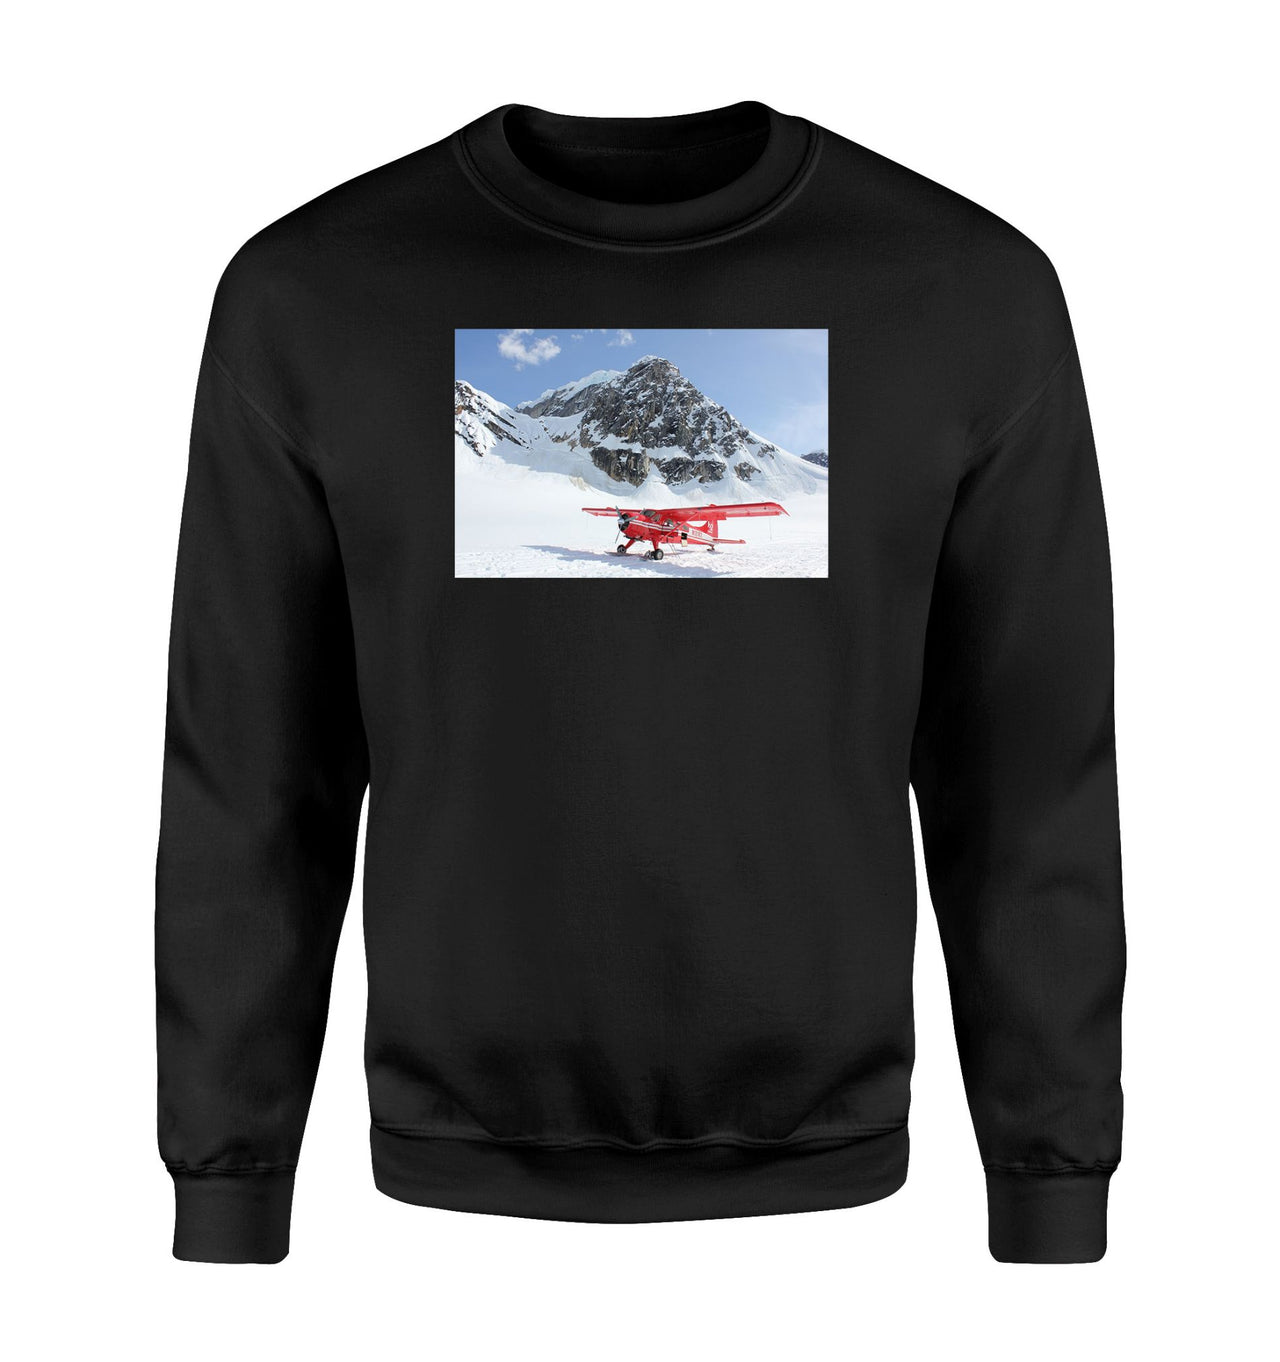 Amazing Snow Airplane Designed Sweatshirts